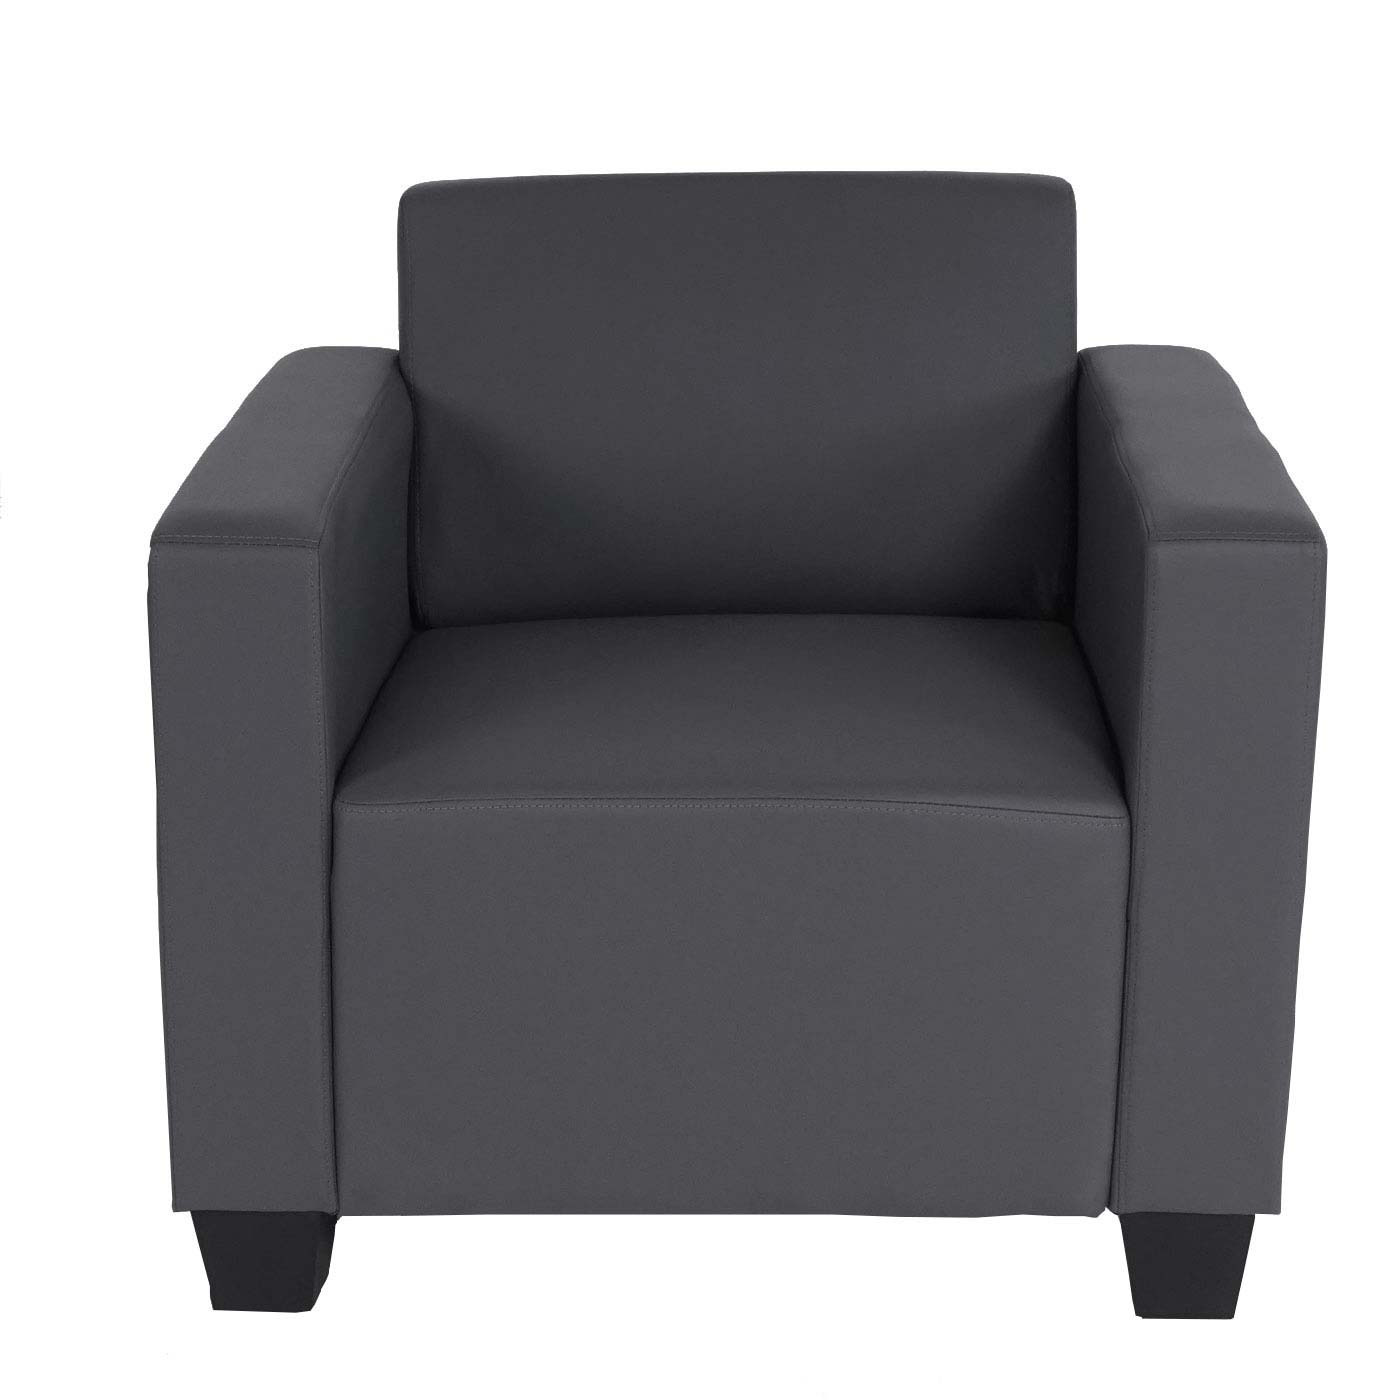 Modular Sofa-System Couch-Garnitur Lyon 4-1-1 Sessel Frontansicht